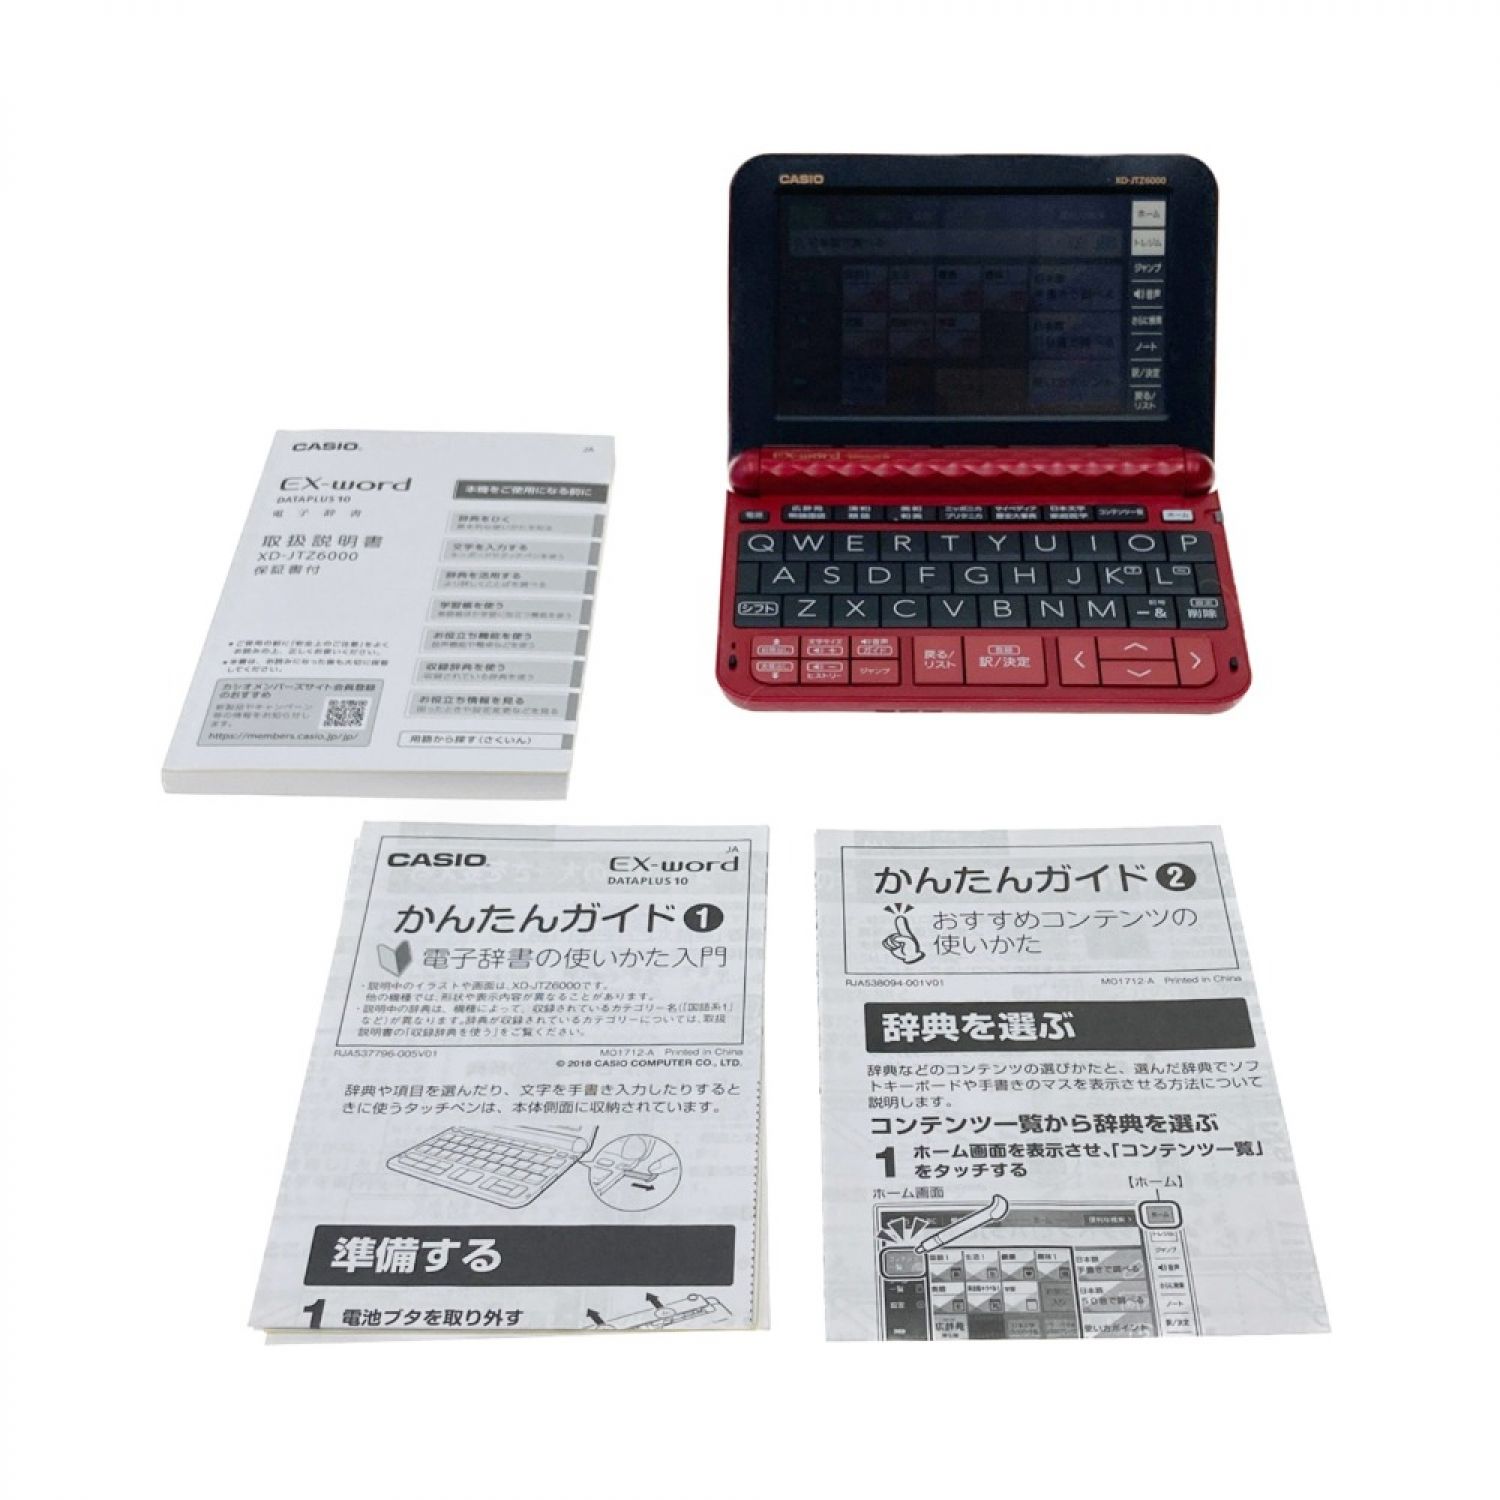 CASIO カシオ / 多機能電子辞書 EX-ward DATAPLUS10